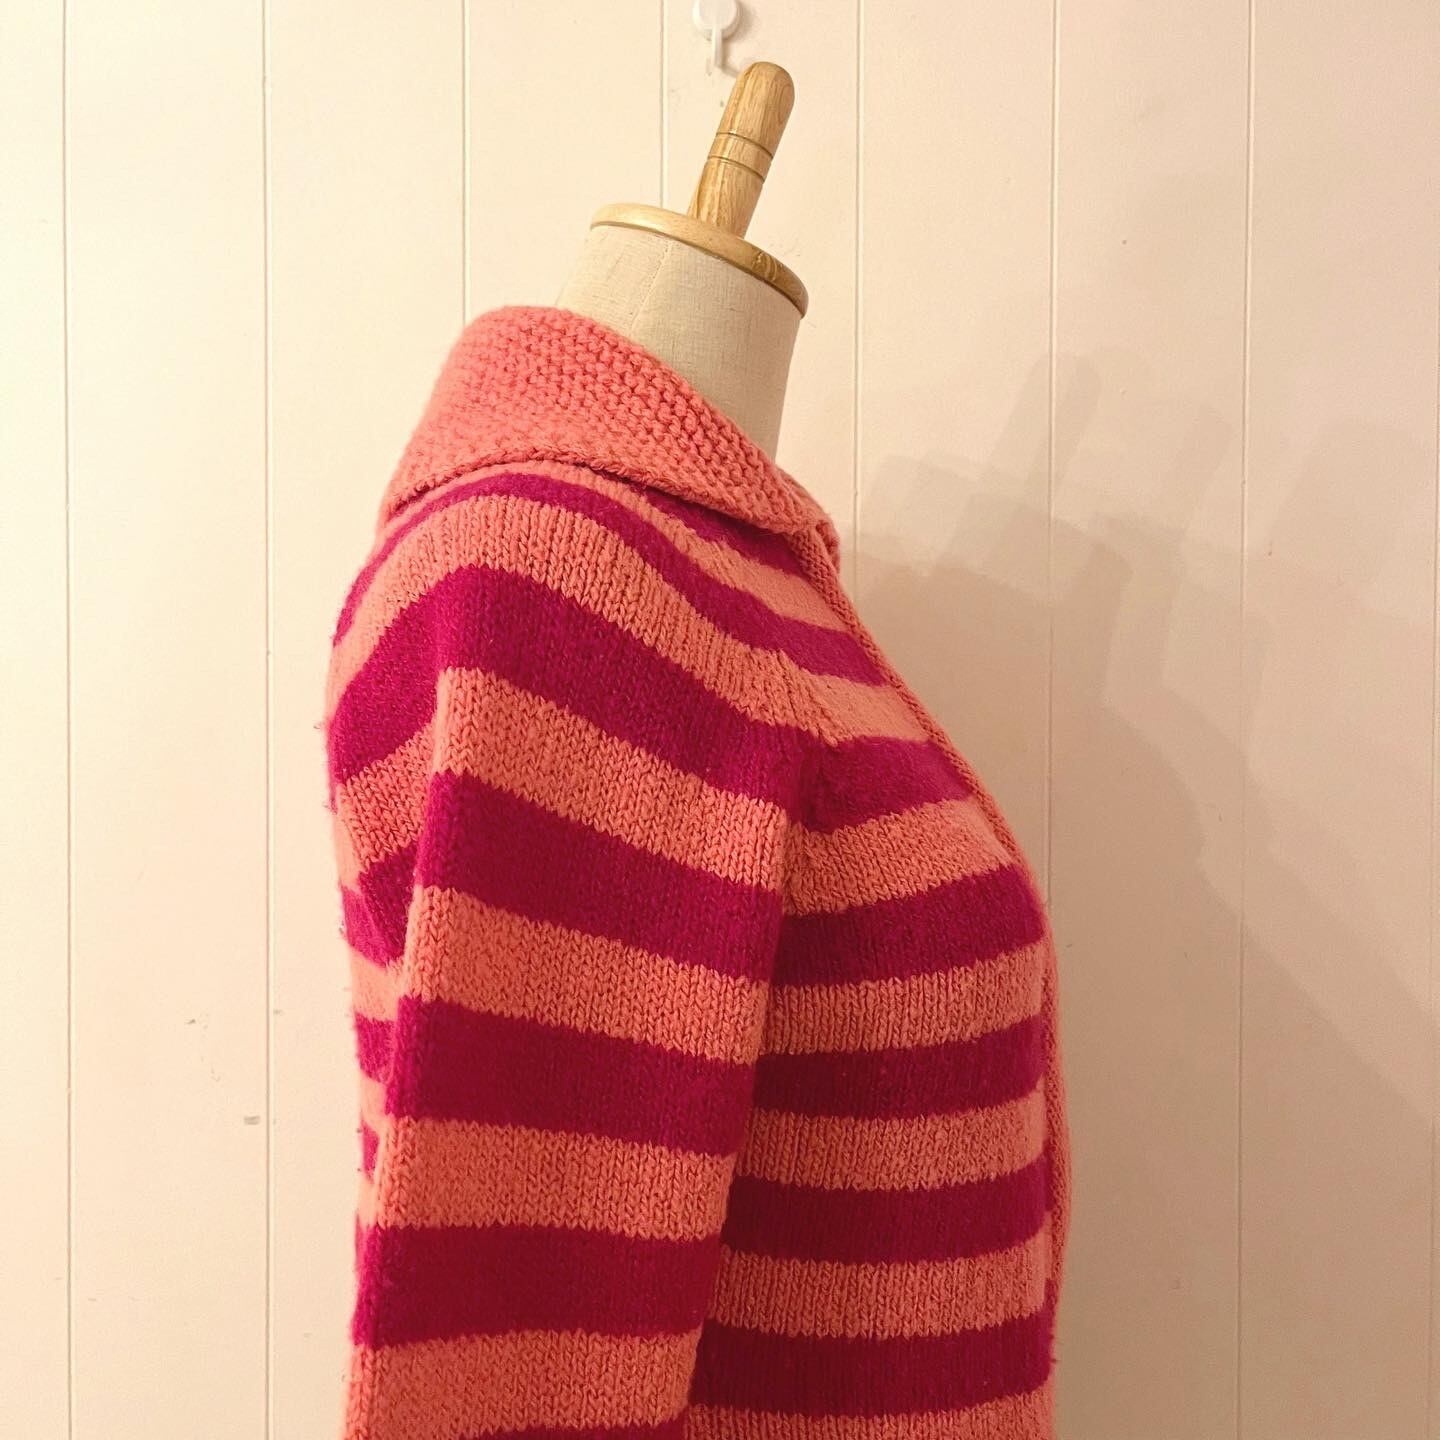 paul smith / pink border knit cardigan